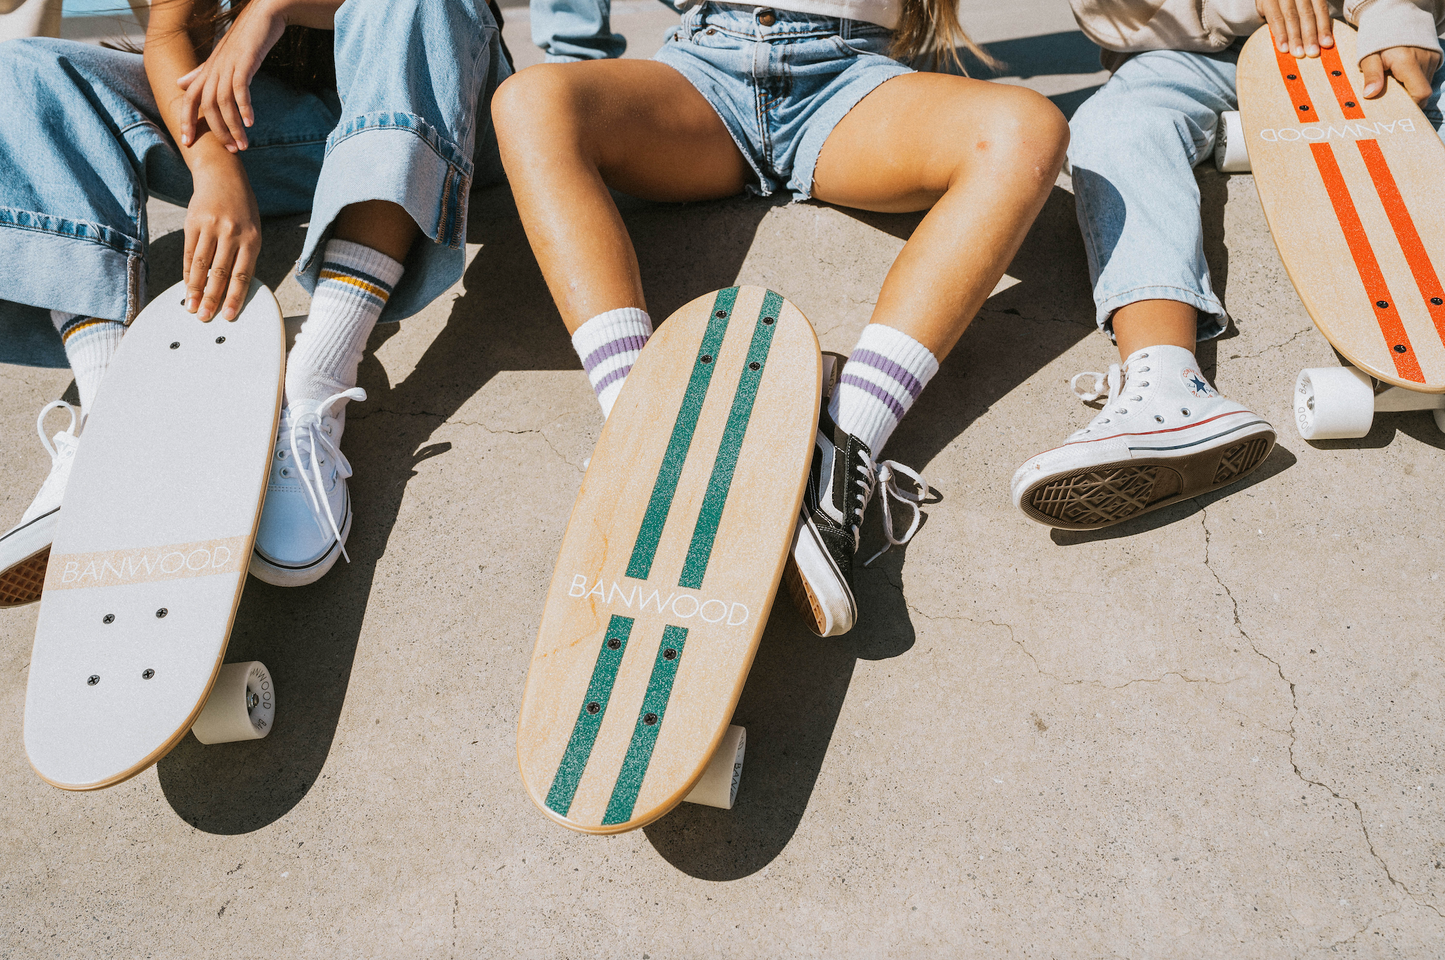 Wooden kids skateboard-Green